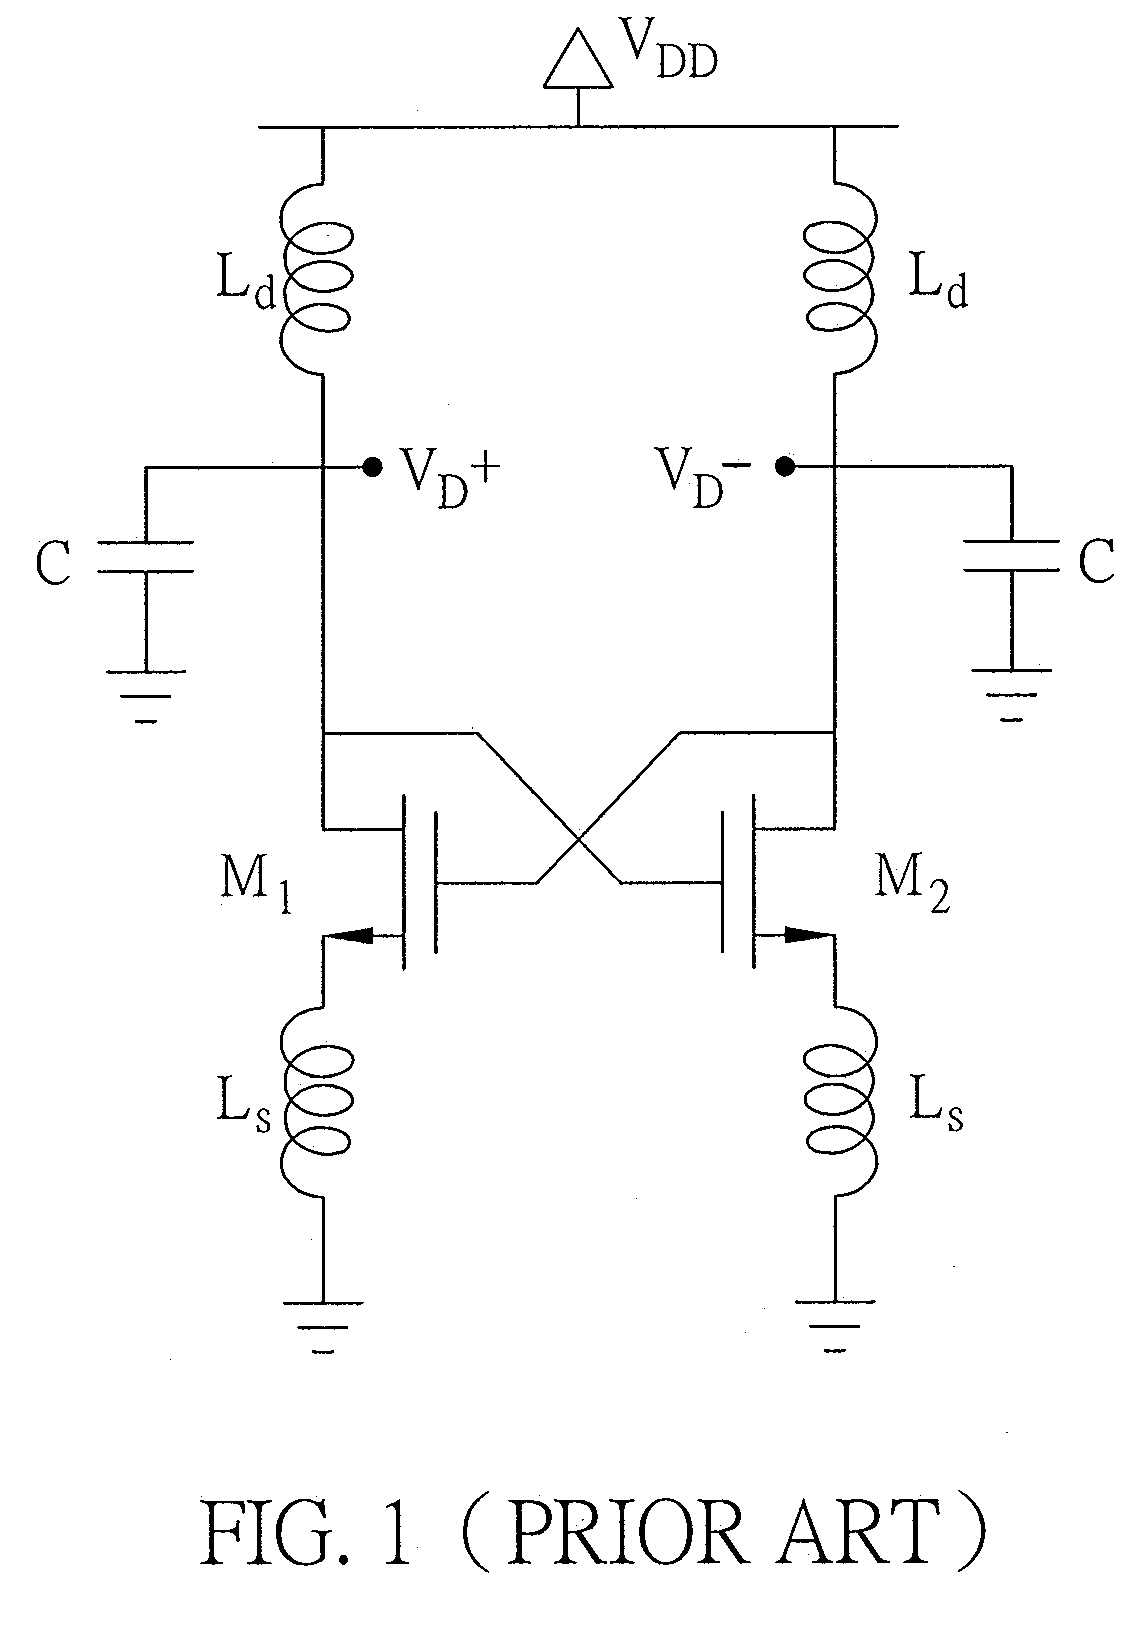 Transistor voltage-controlled oscillator